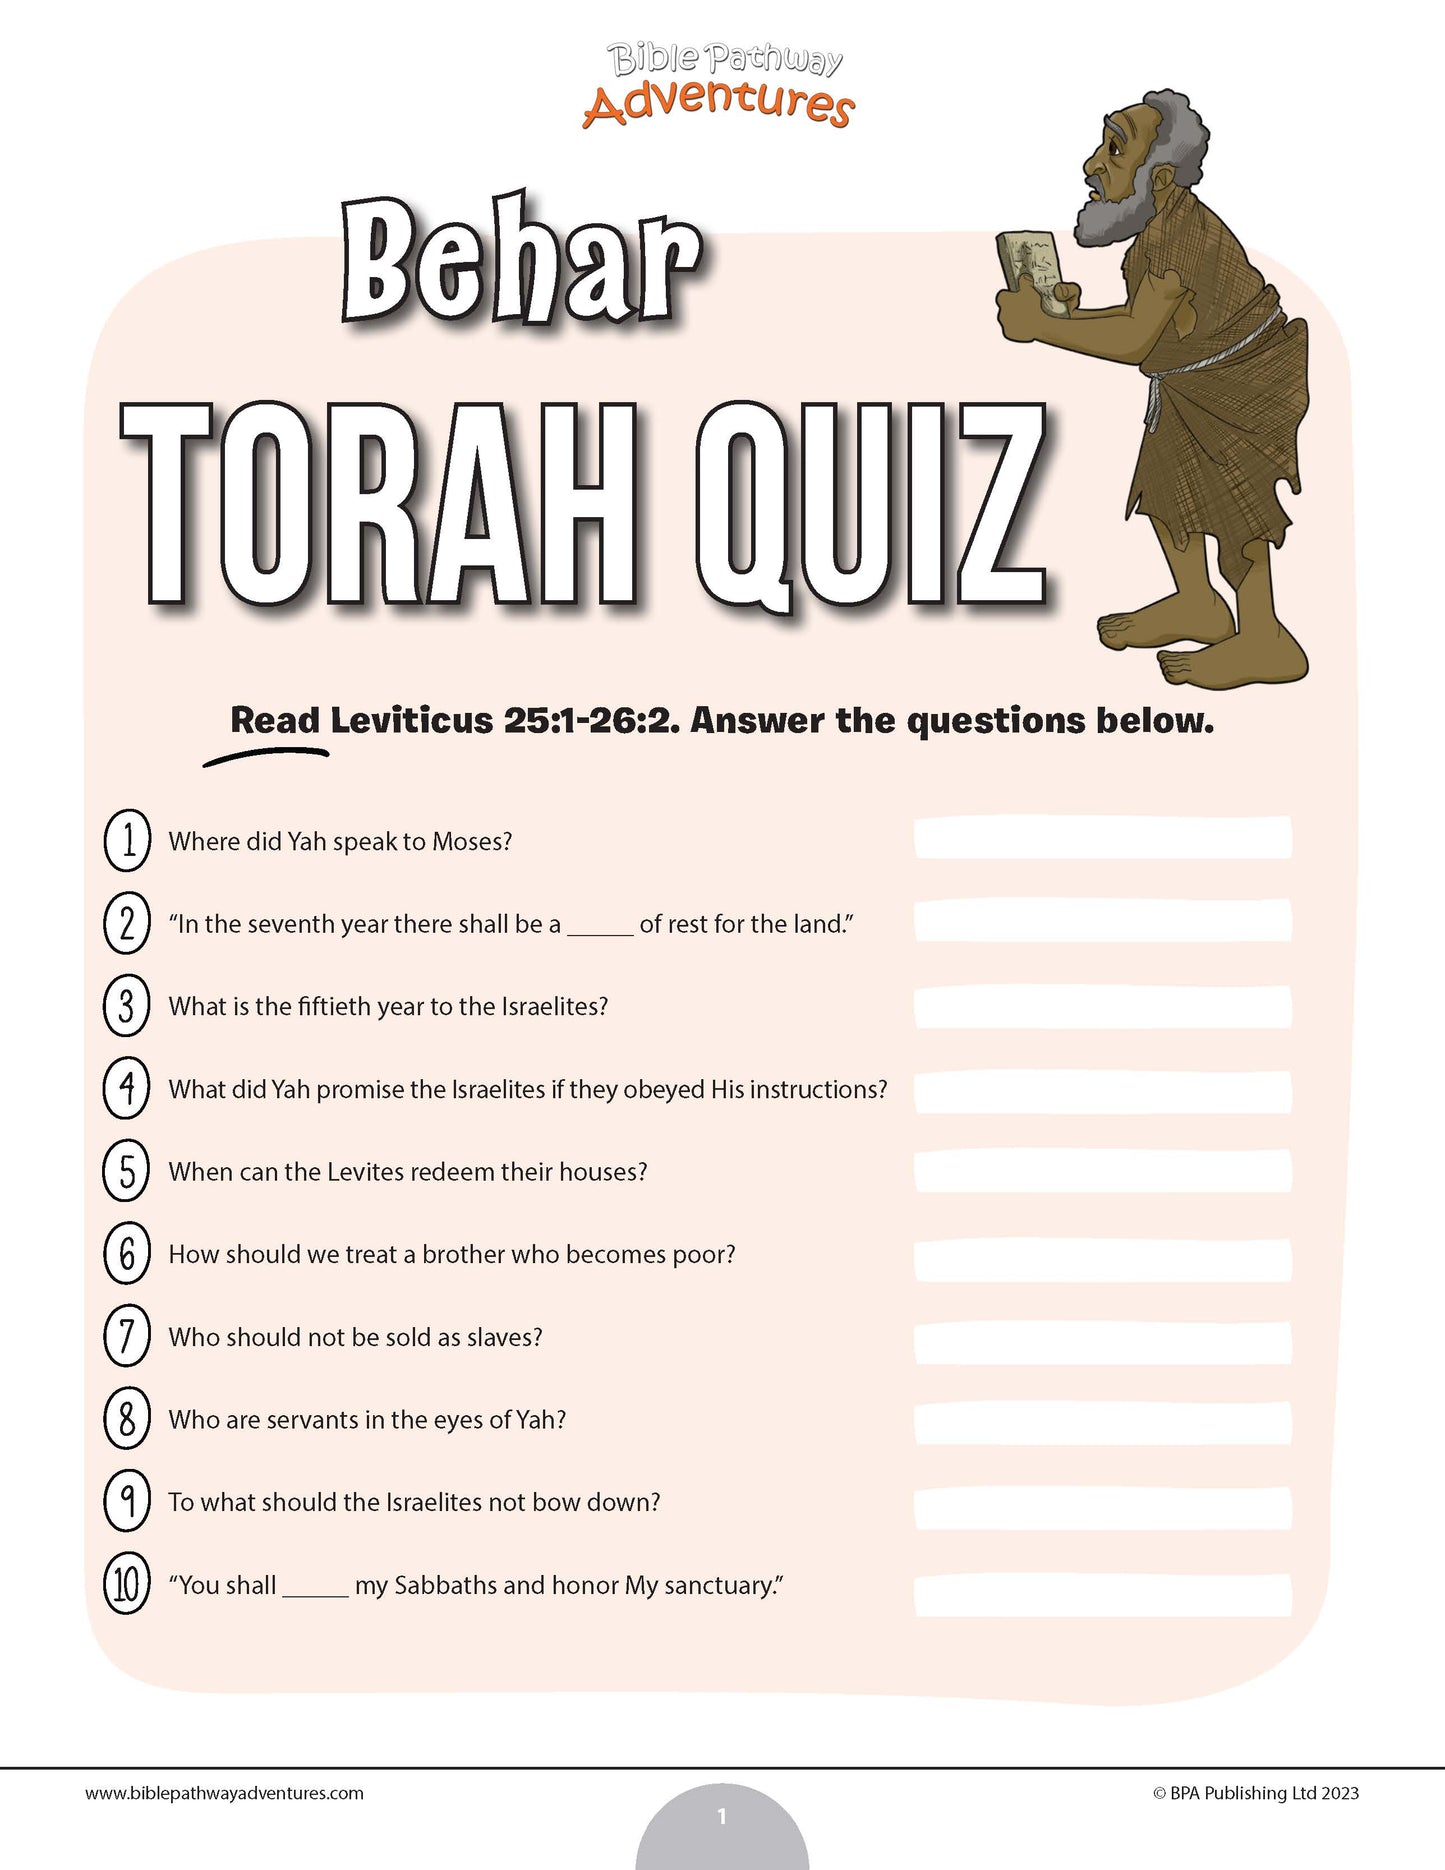 Behar Torah quiz